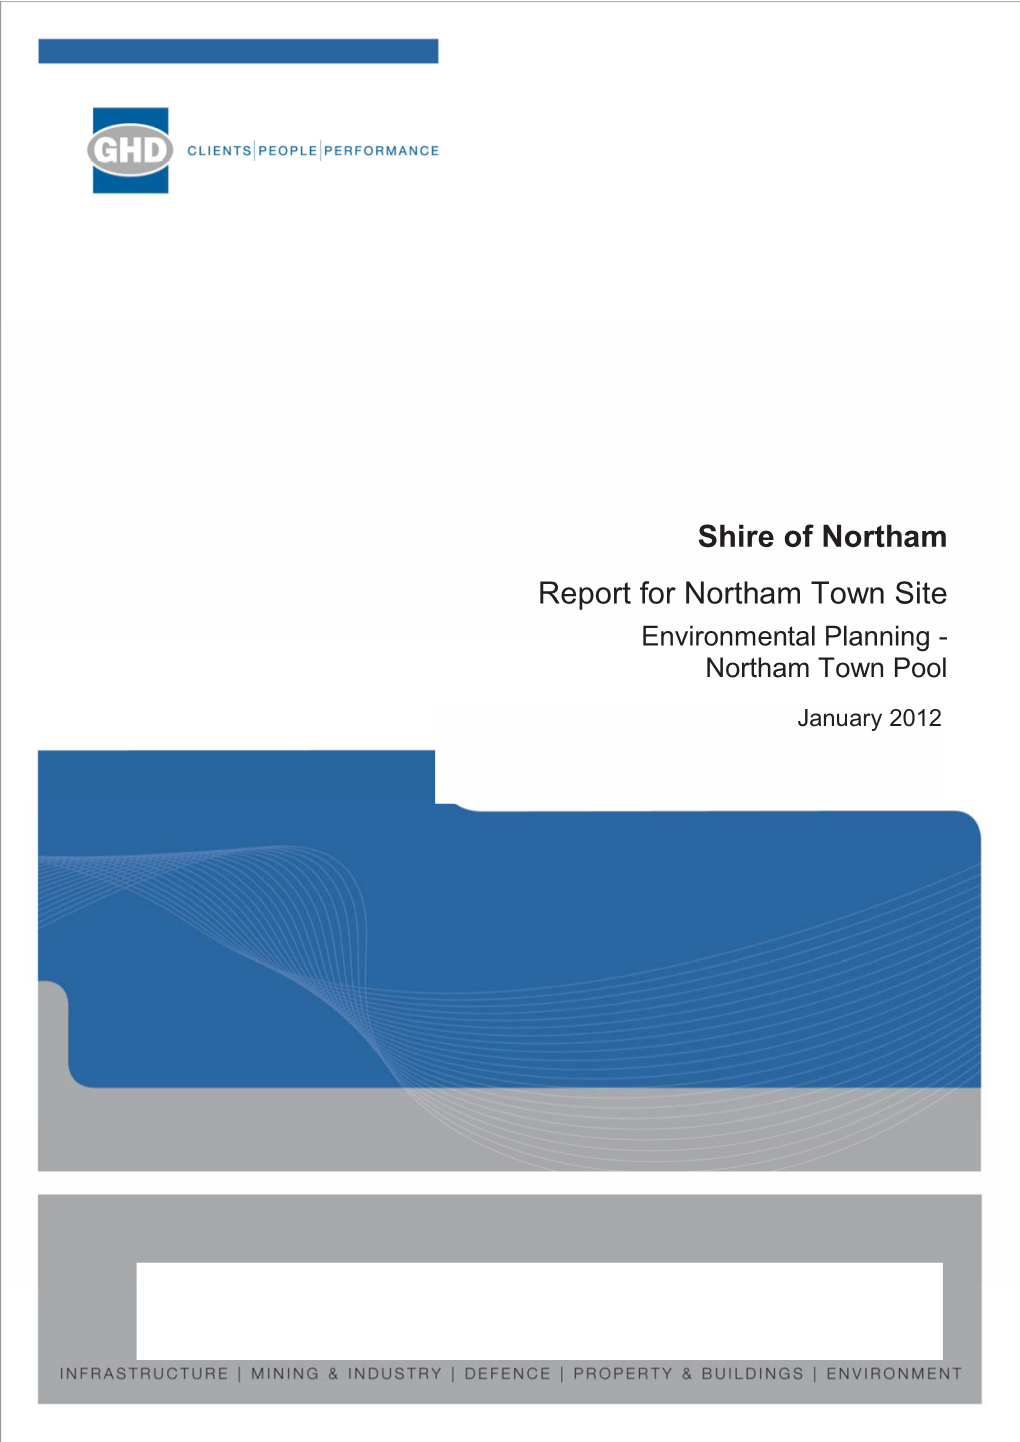 Environmental Planning - Northam Town Pool